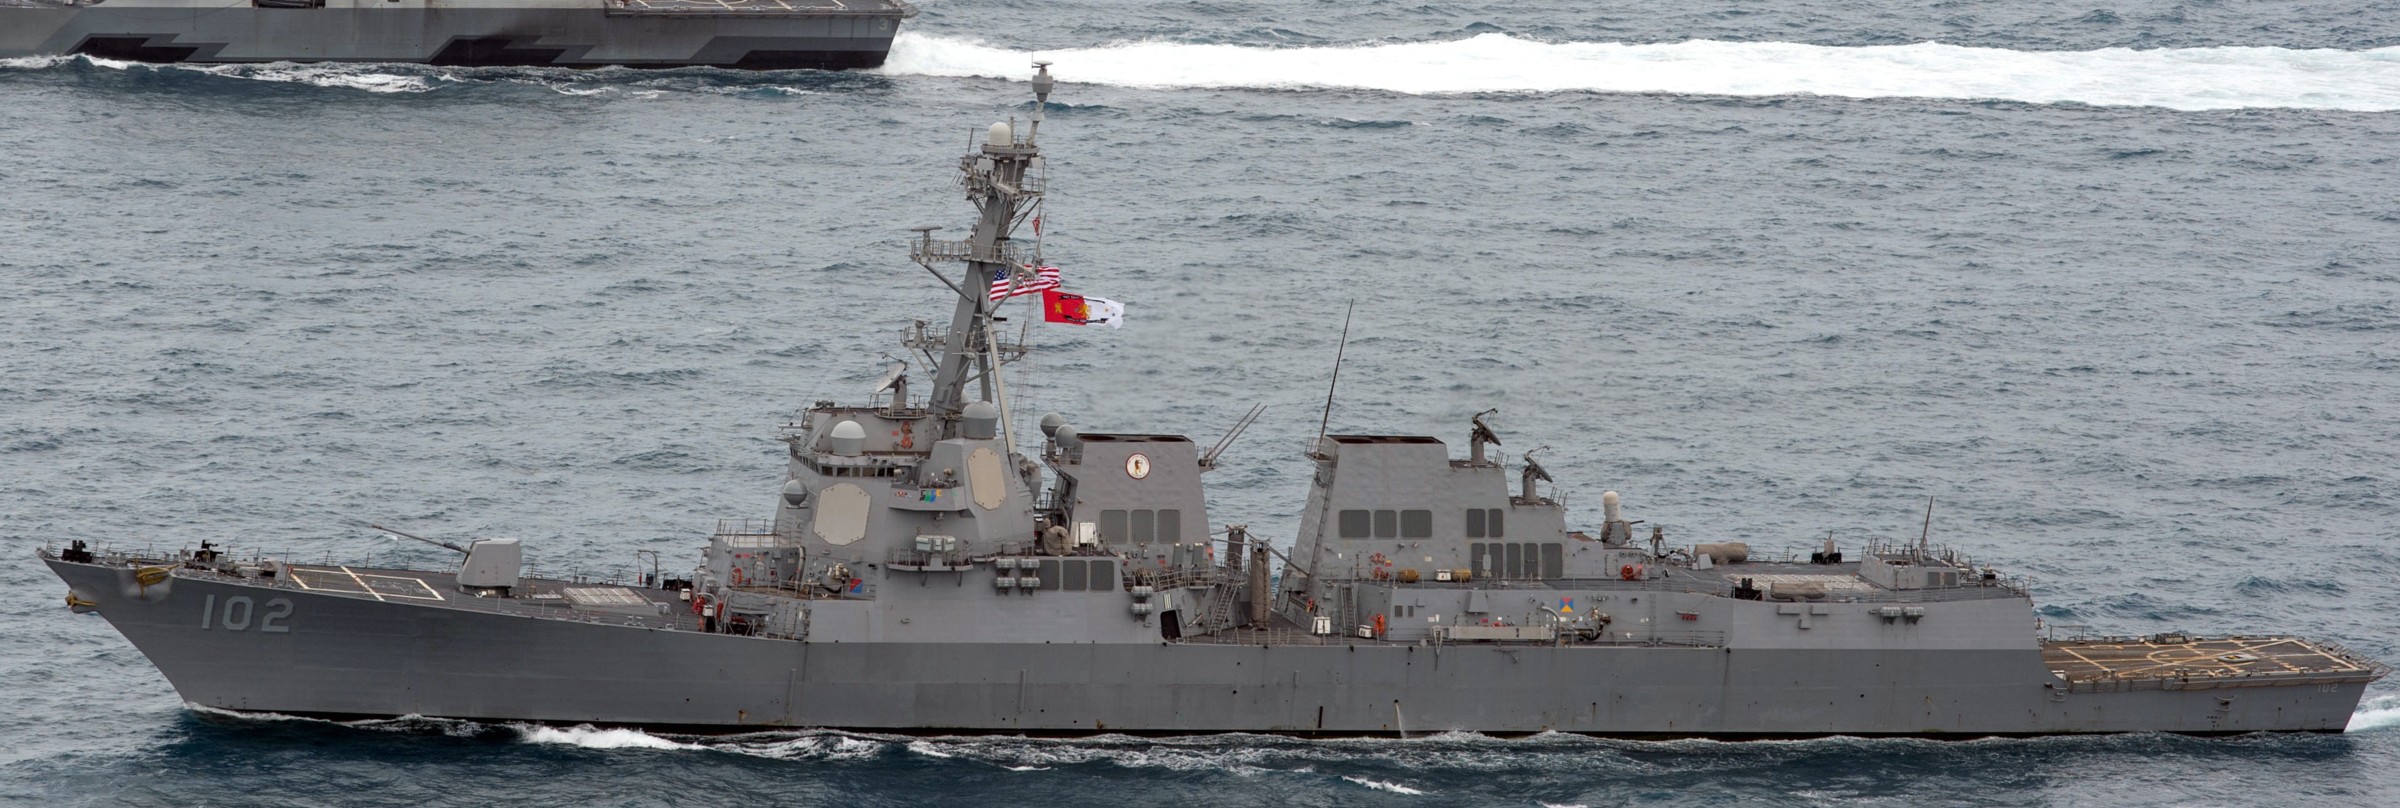 ddg-102 uss sampson guided missile destroyer 2015 12